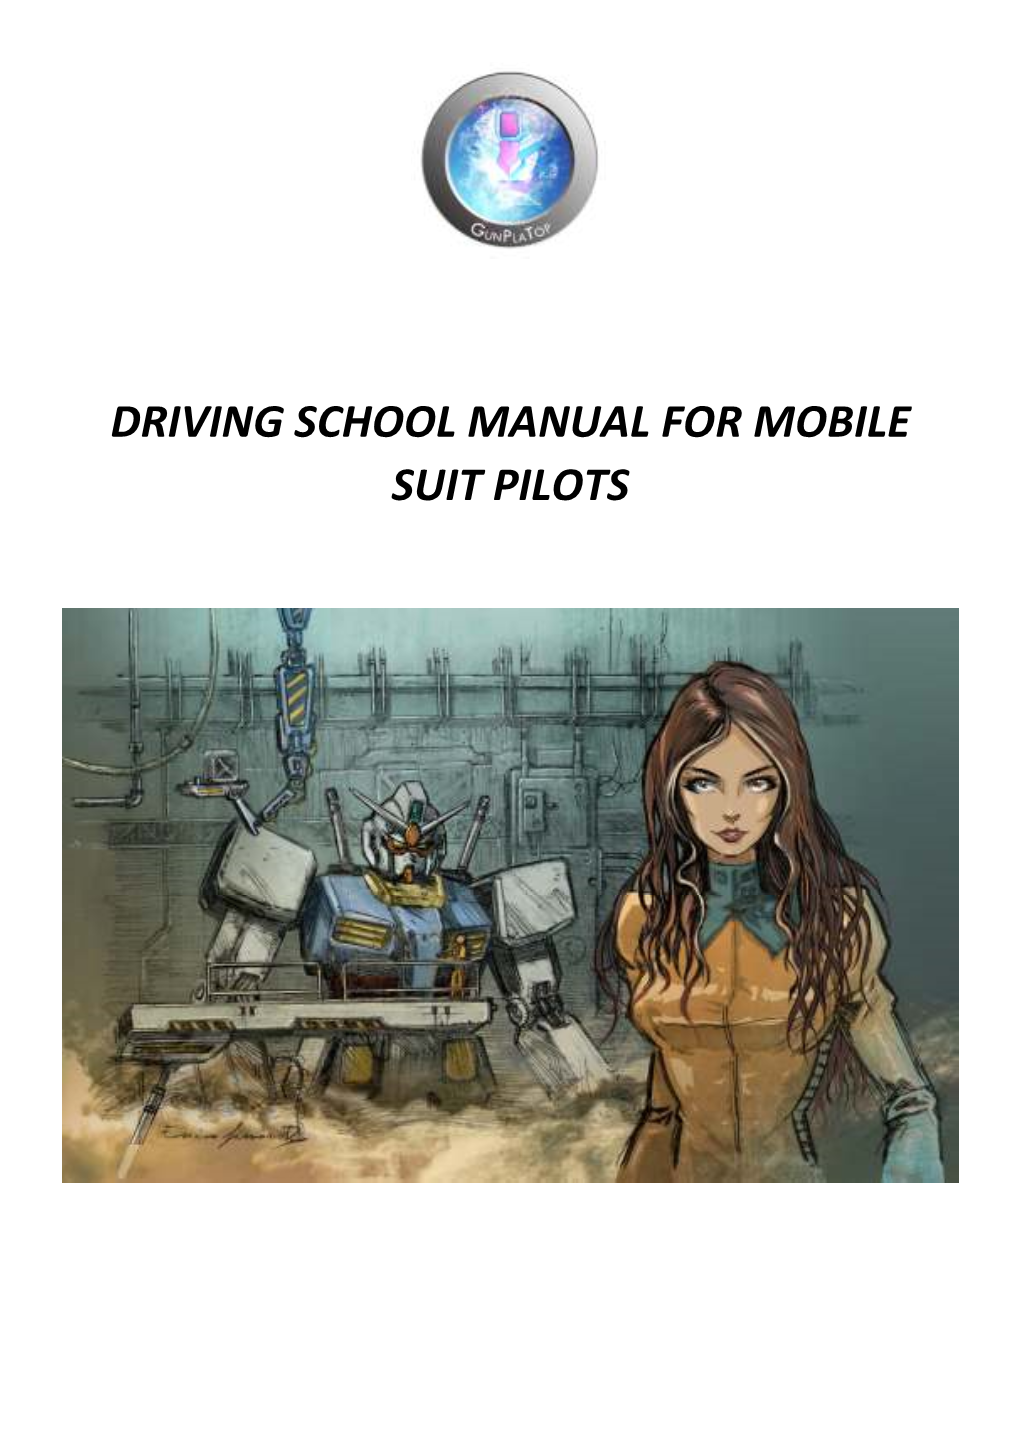 Driving School Manual for Mobile Suit Pilots